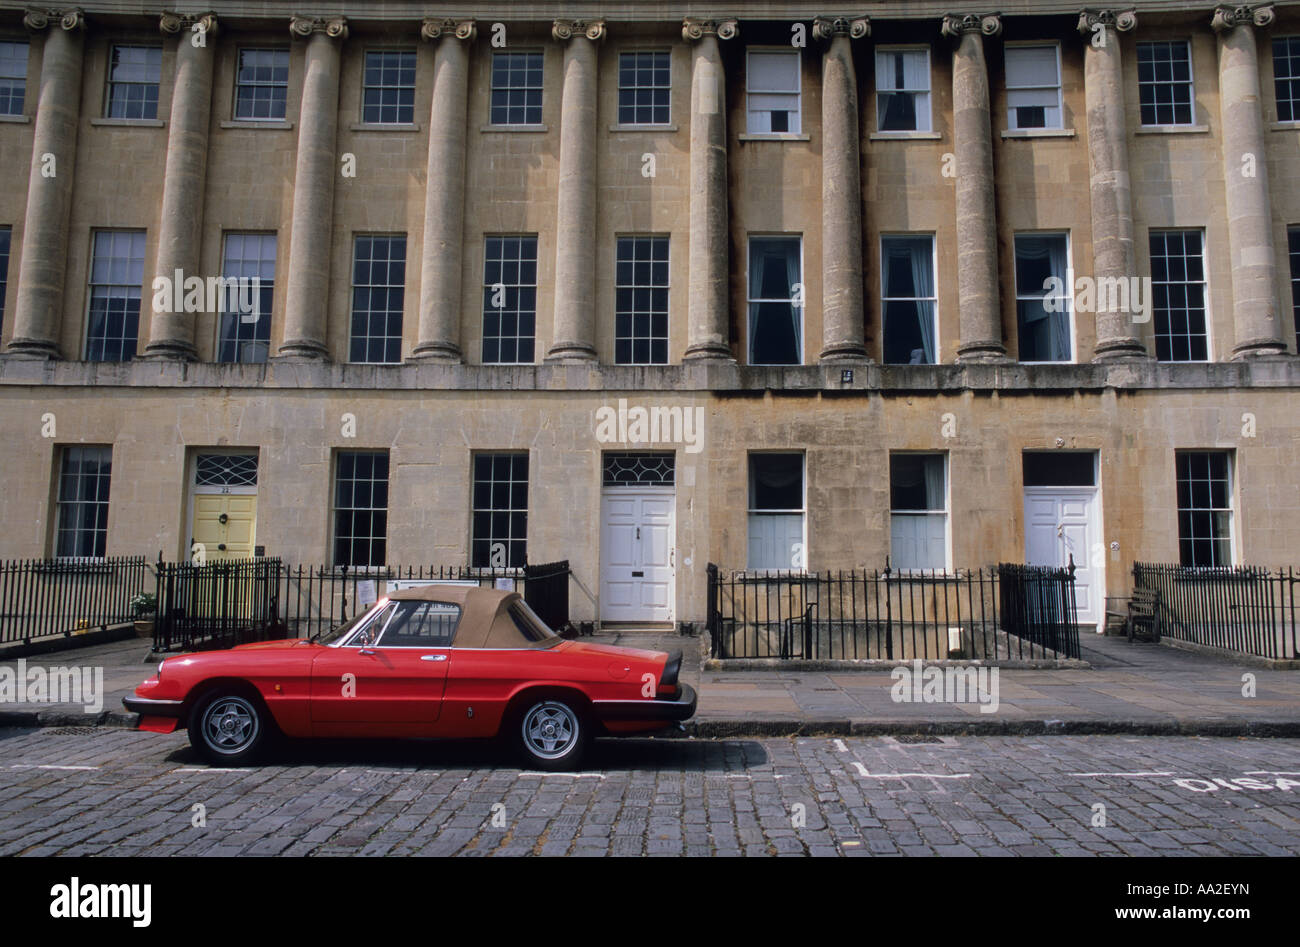 Alfa Romeo Spyder in the Royal Crescent, Bath, England Stock Photo